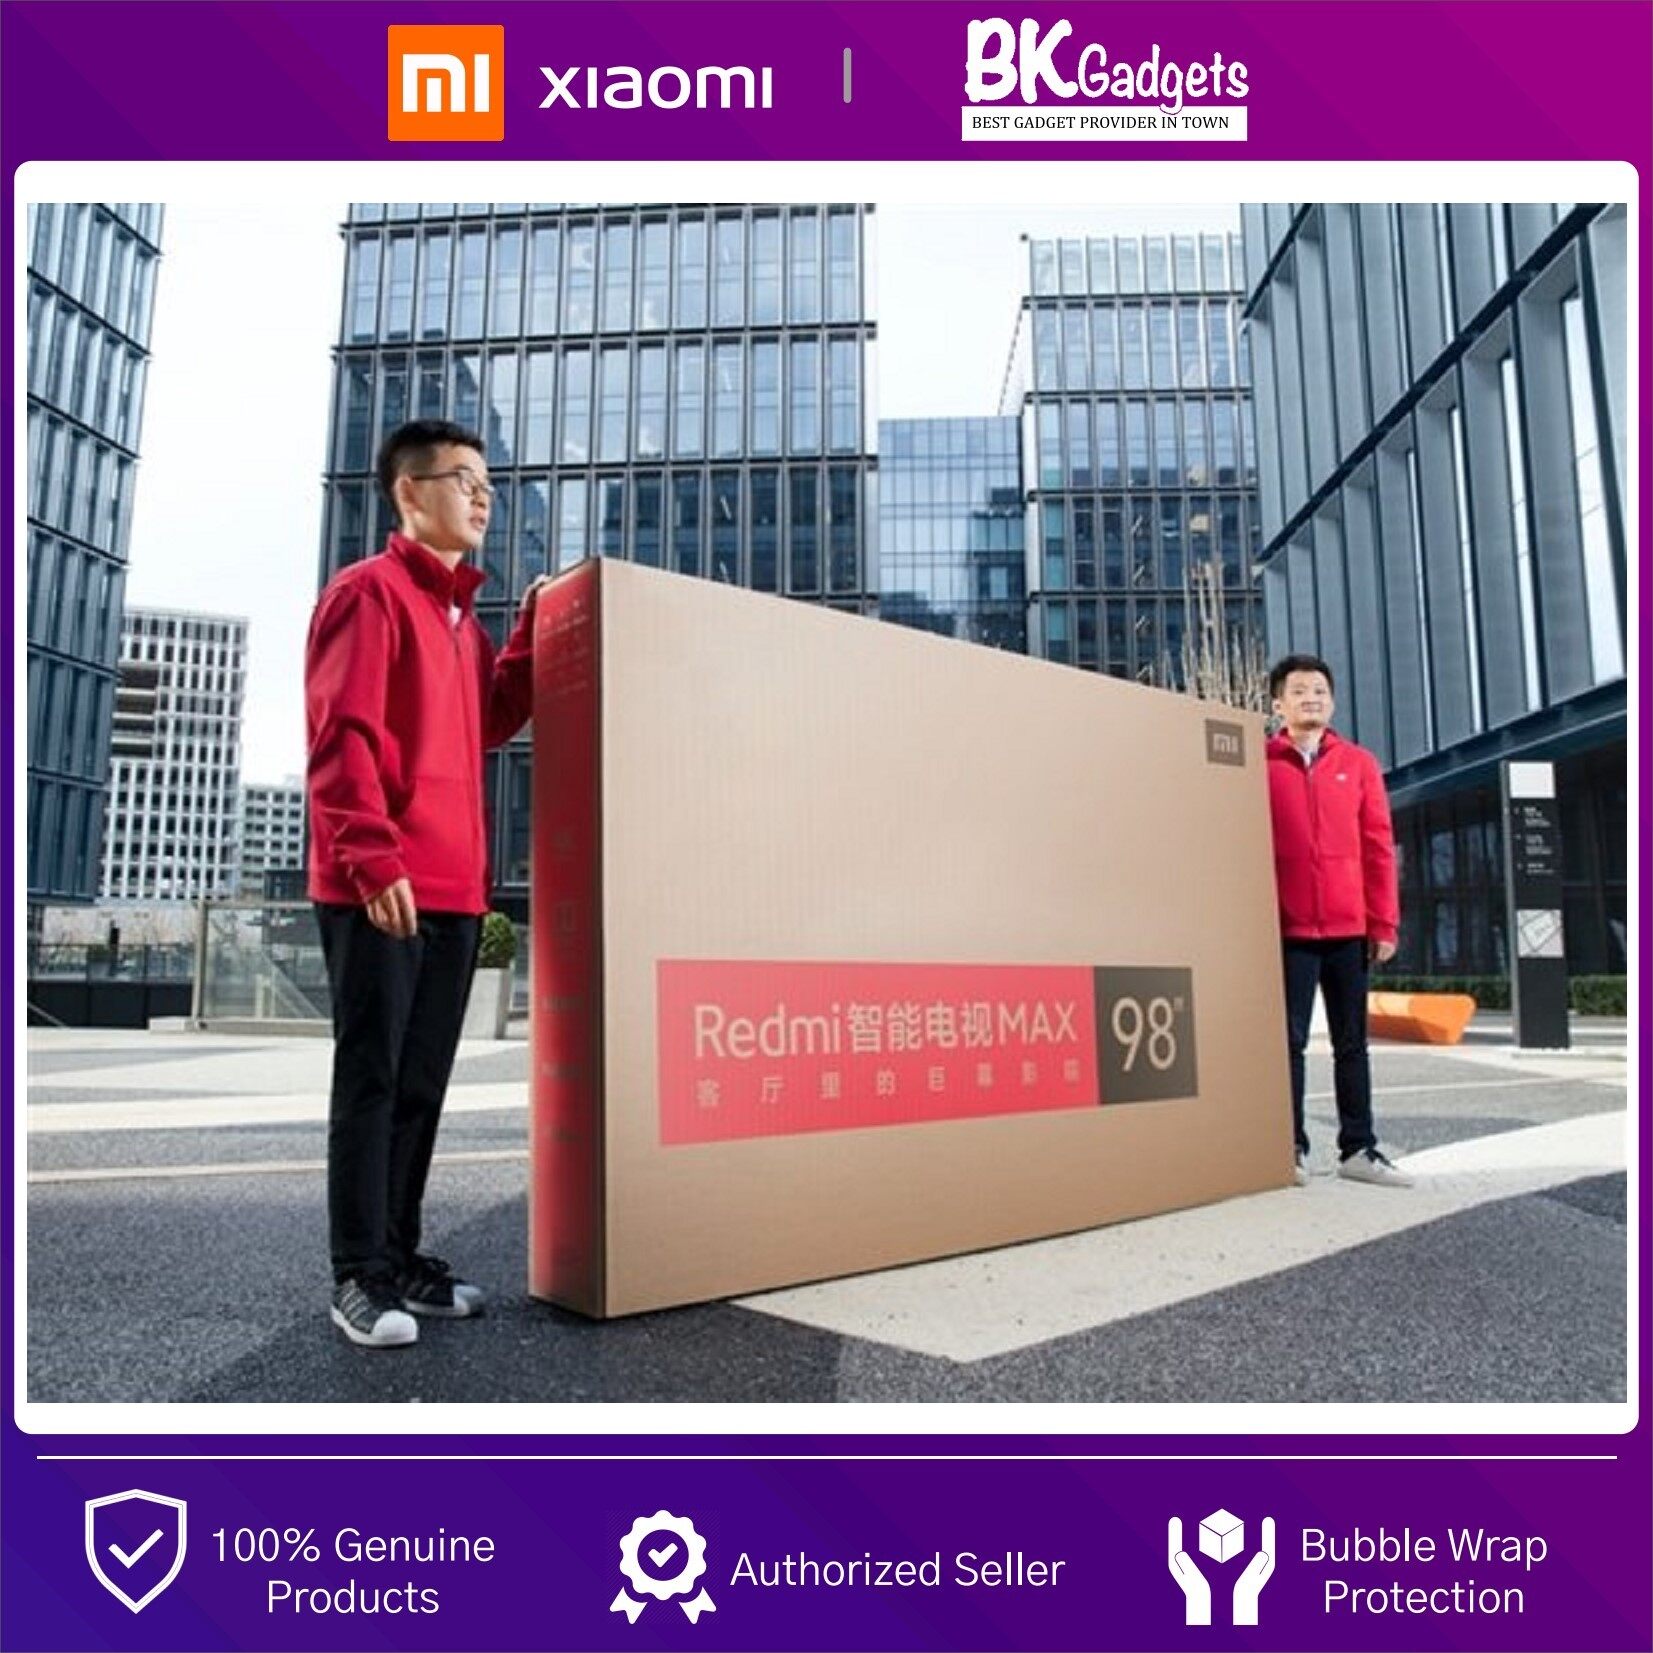 XiaoMi Redmi LED Smart TV Max 98" Giant Screen 4K Ultra HD - MEMC Motion Compensation | 192 Zone Dynamic Backlight | Large Cavity Four-unit Speaker | Chinese Version | 1 Year Warranty